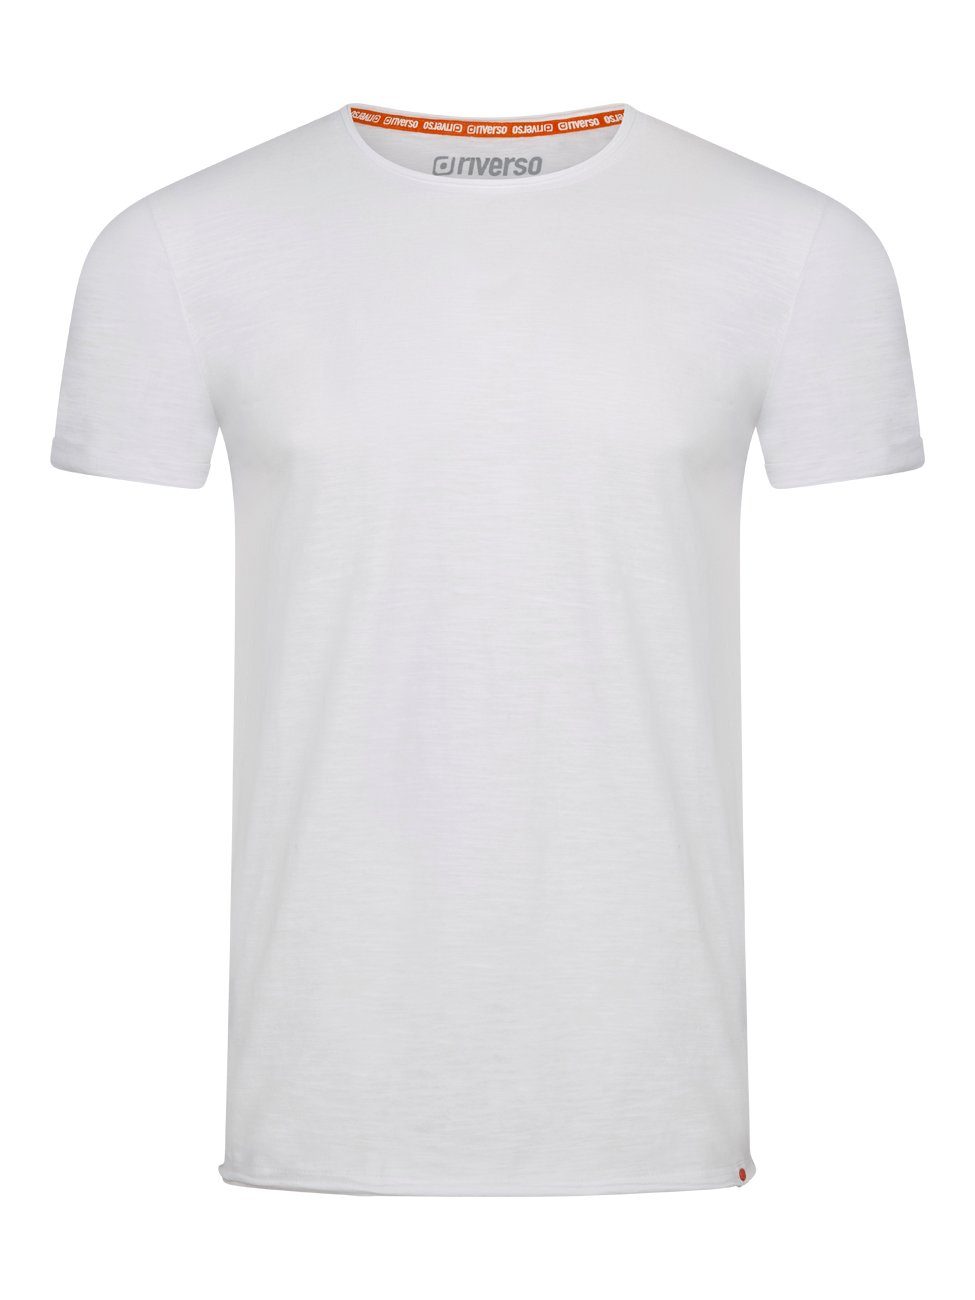 riverso T-Shirt Herren Basic Shirt mit 100% Tee Shirt Baumwolle Kurzarm aus White (3-tlg) Fit RIVLenny Rundhalsausschnitt Regular